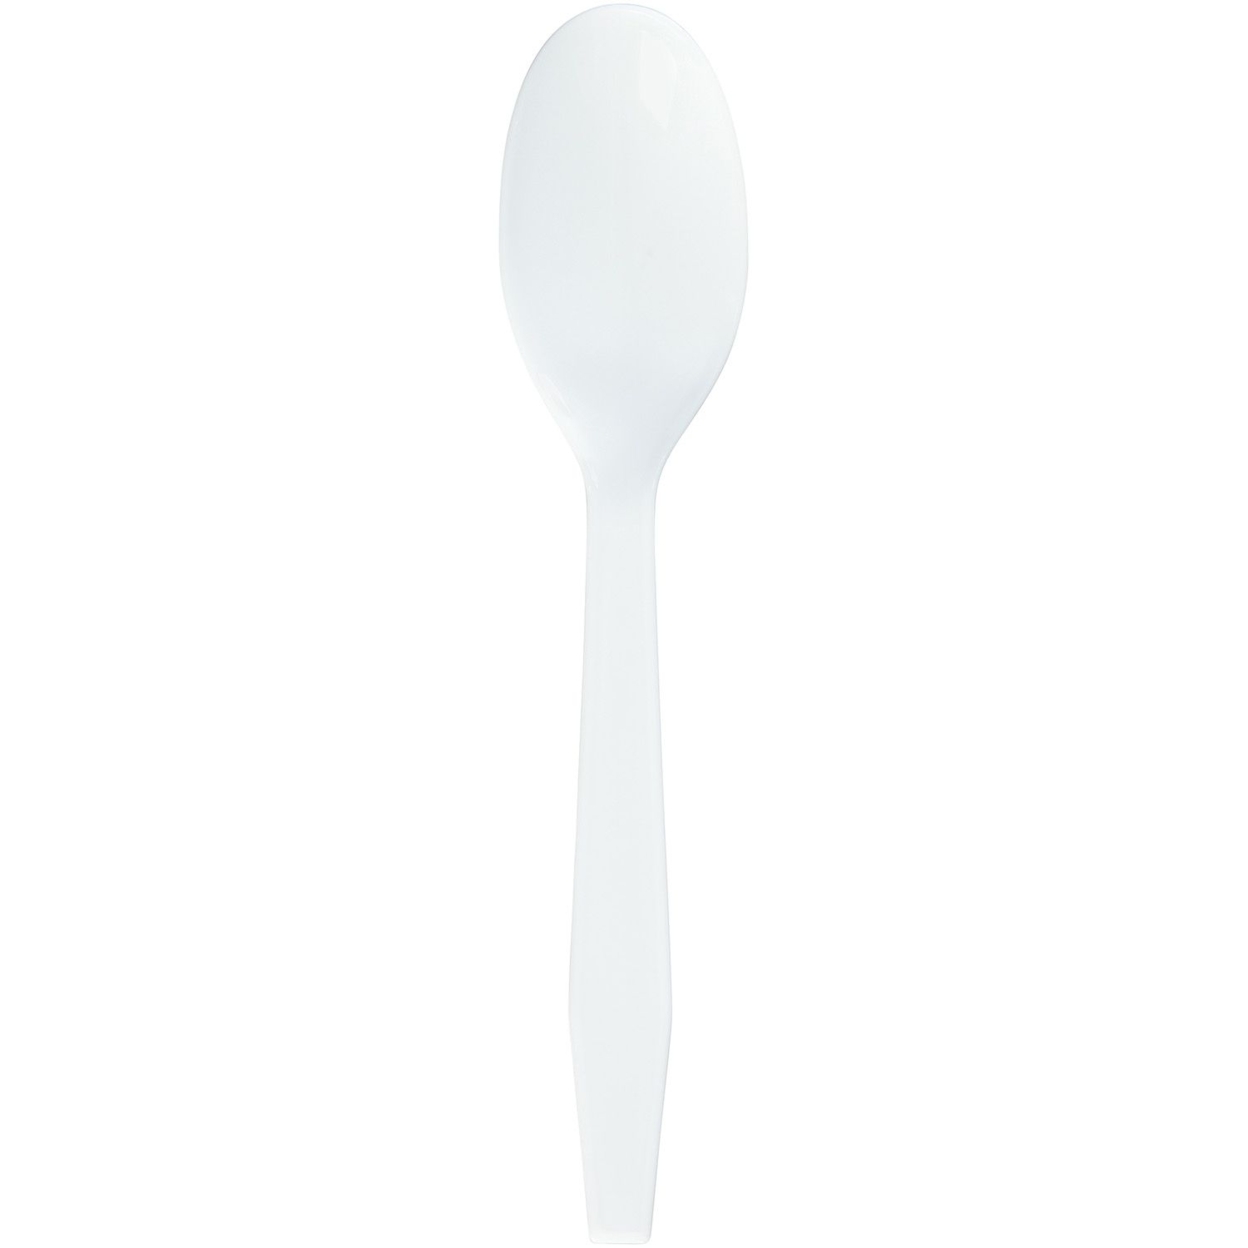 Member's Mark Plastic Spoons - 600 Count